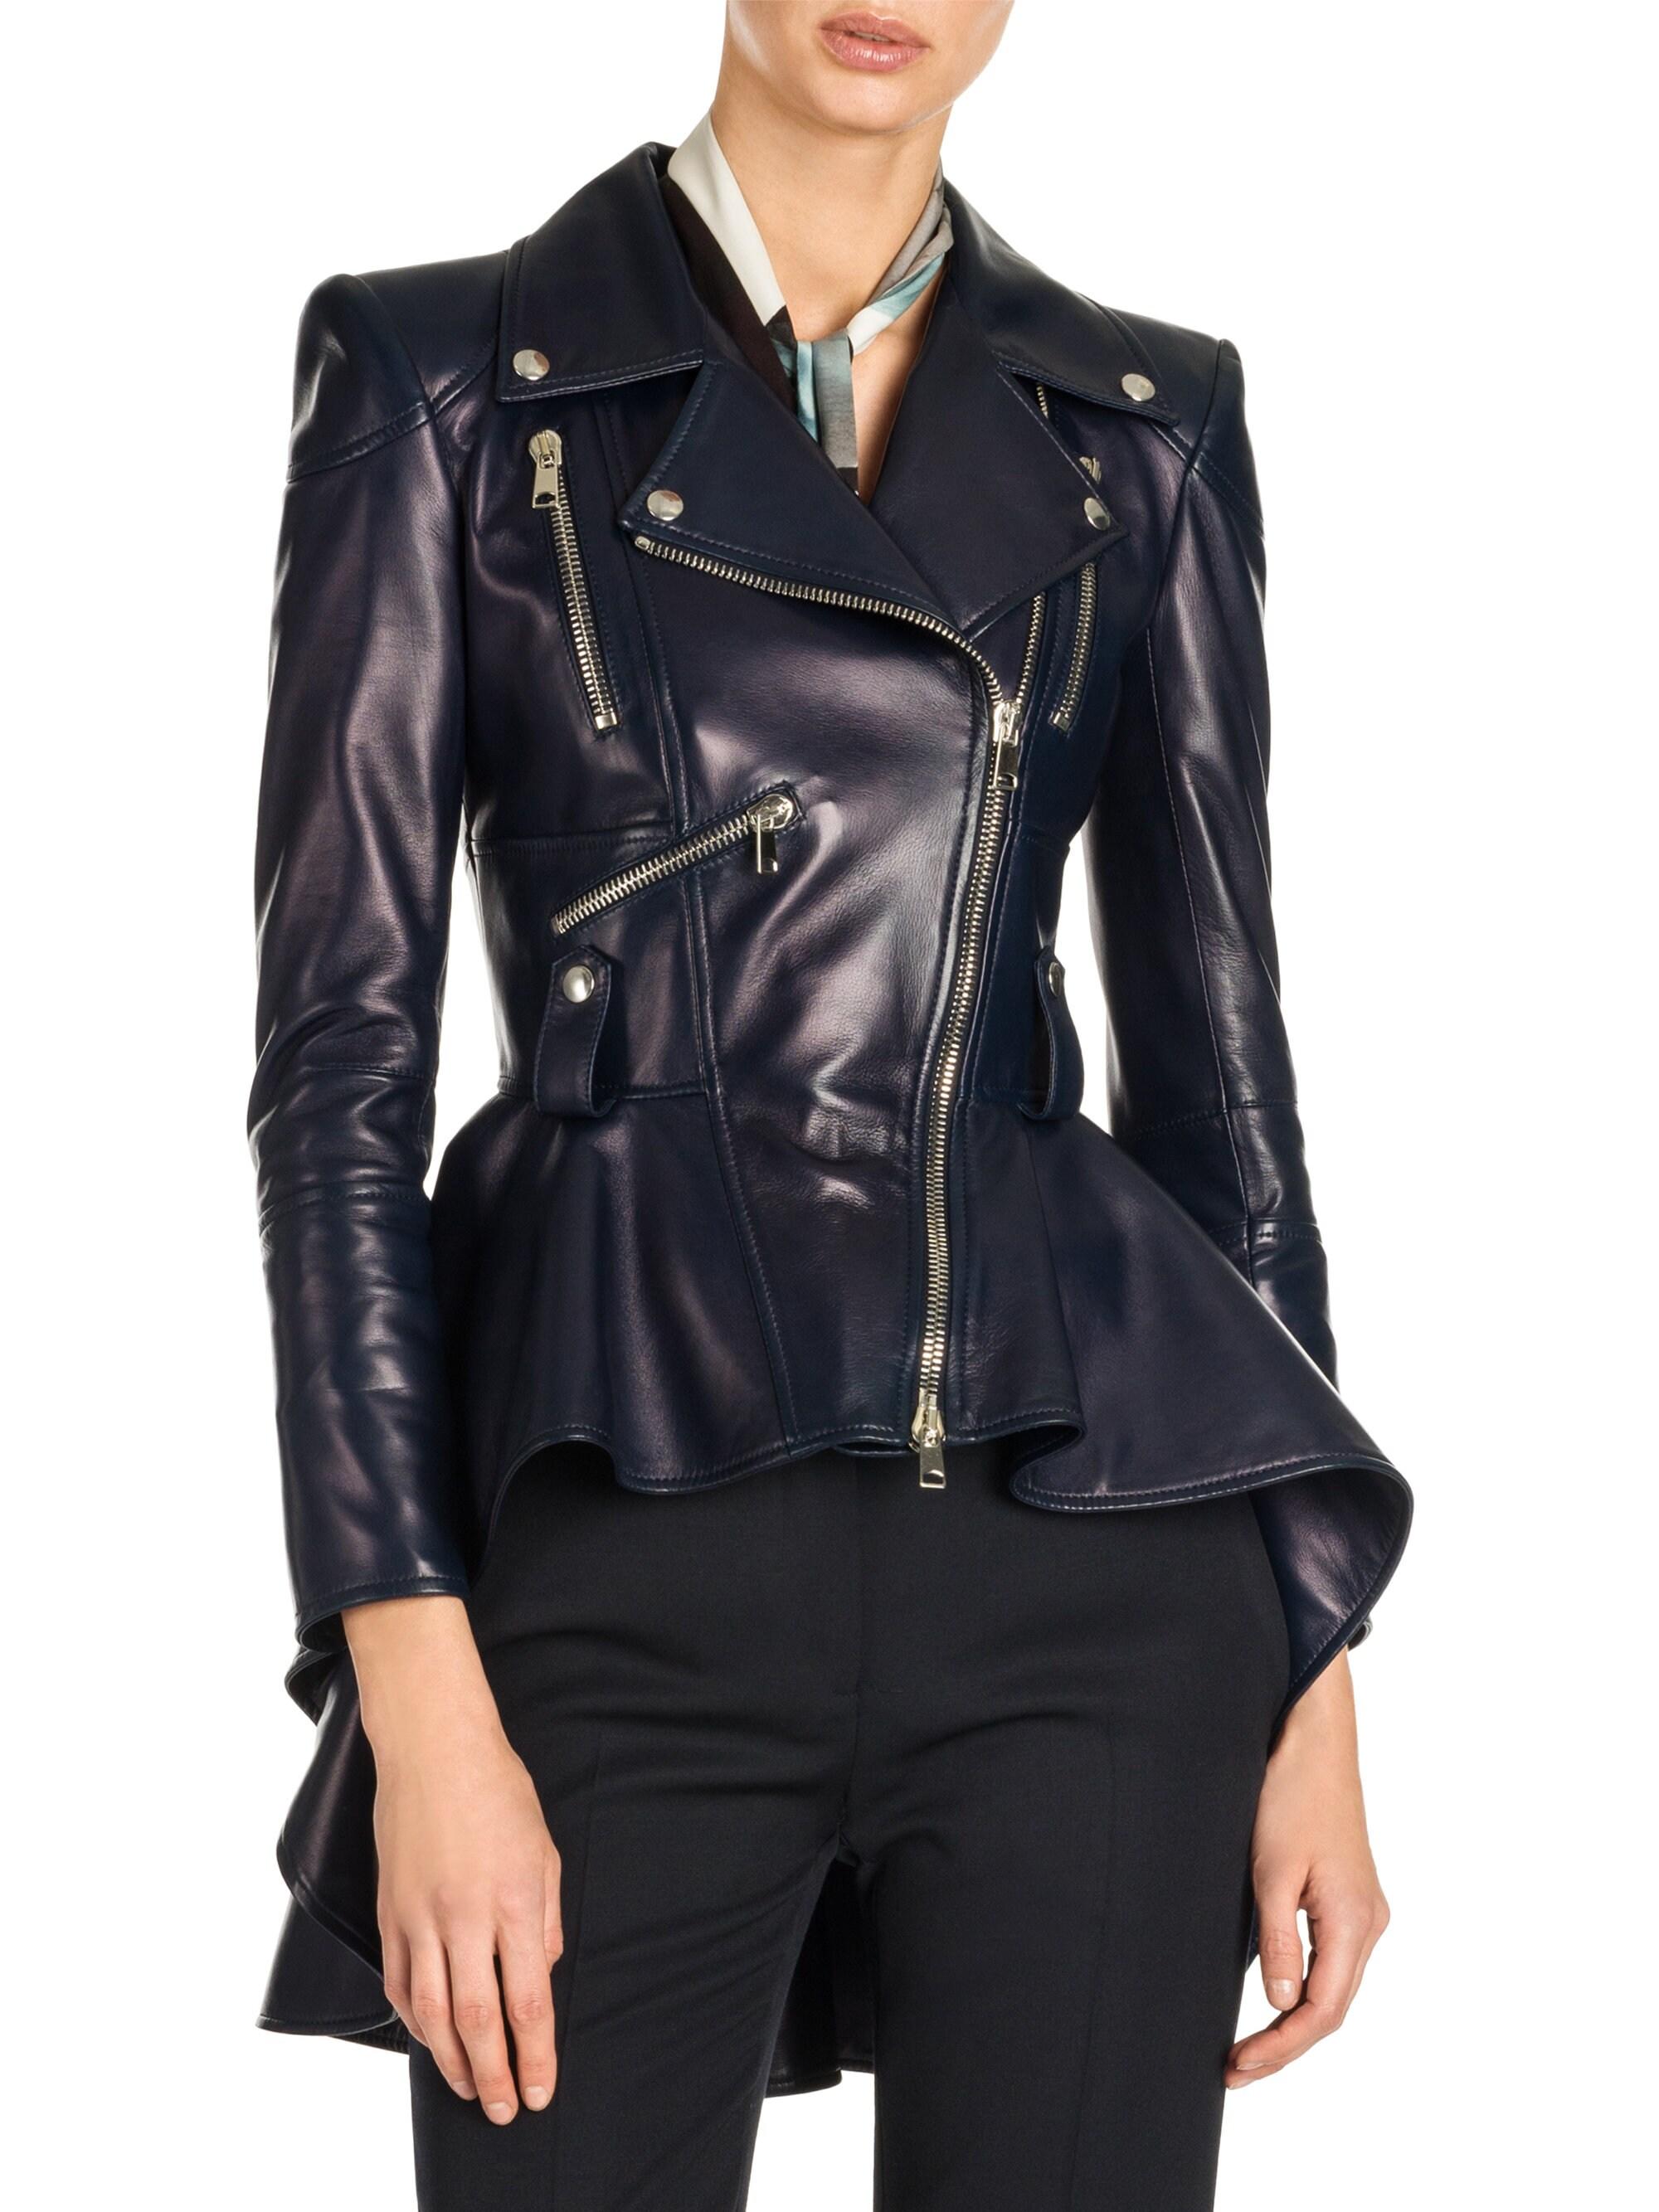 Alexander McQueen Peplum Leather Jacket in Blue - Lyst